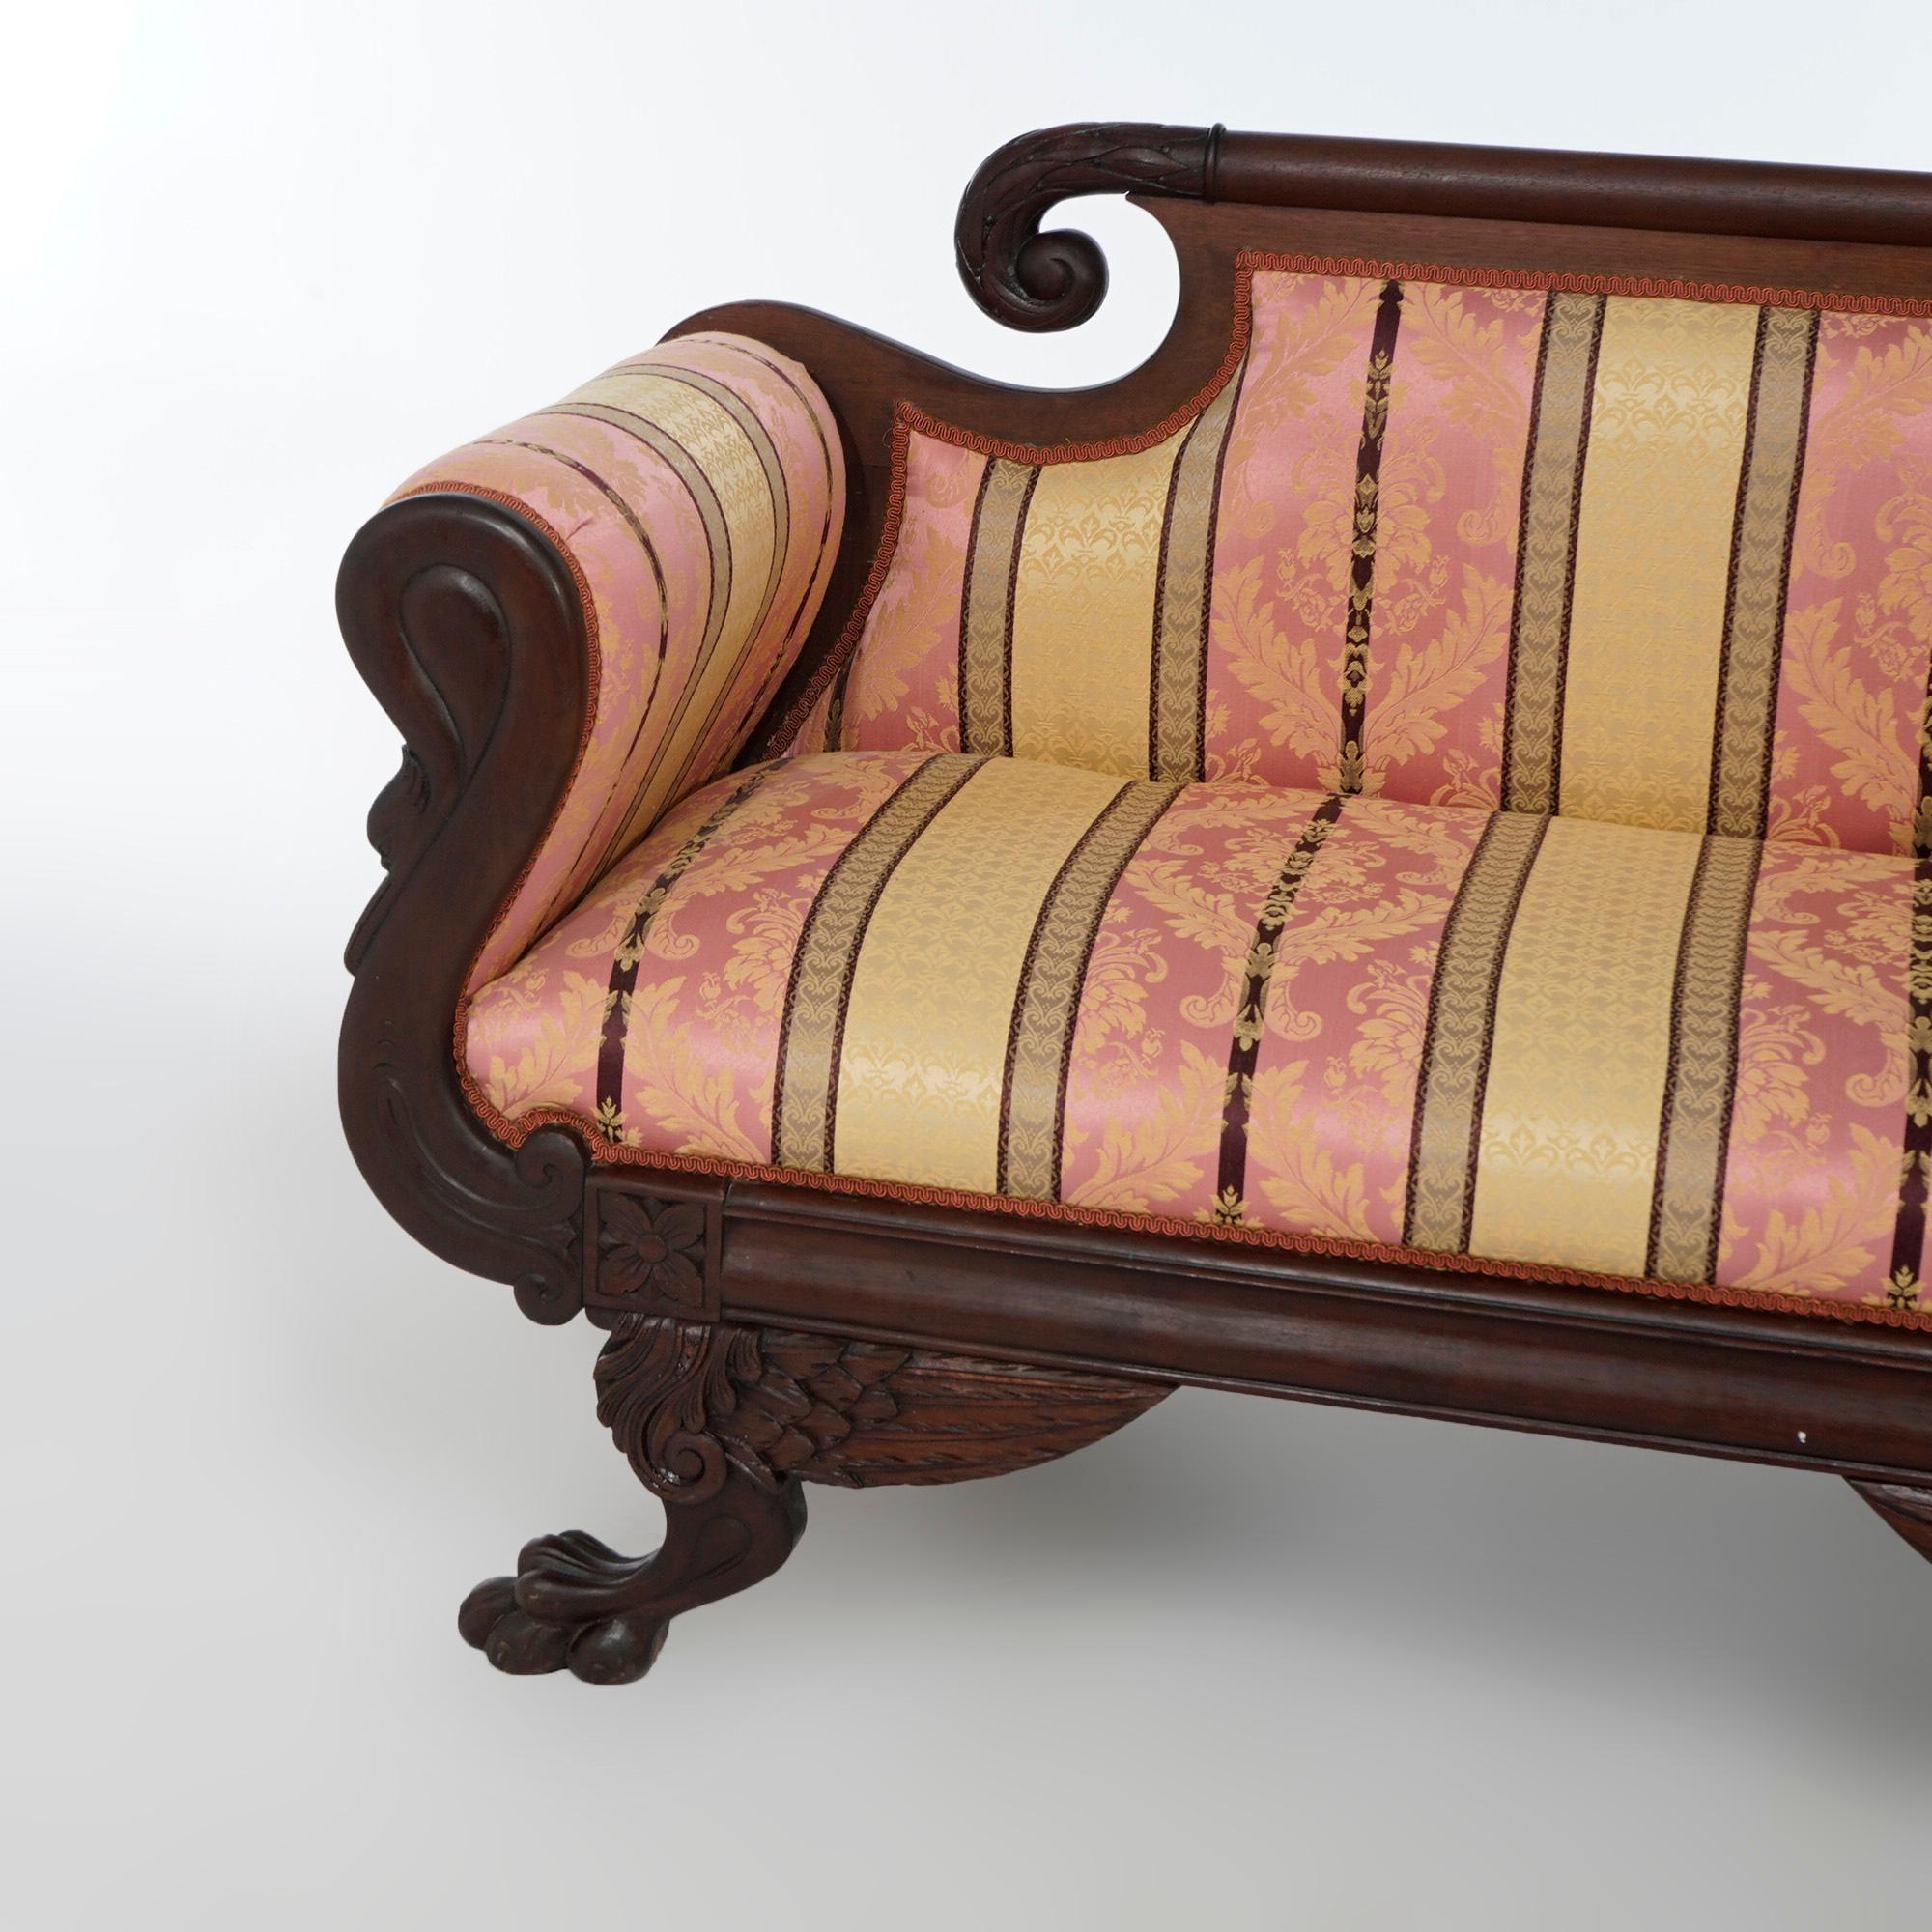 Upholstery Antique American Empire Classical Greco Figural Gooseneck Mahogany Sofa c1840